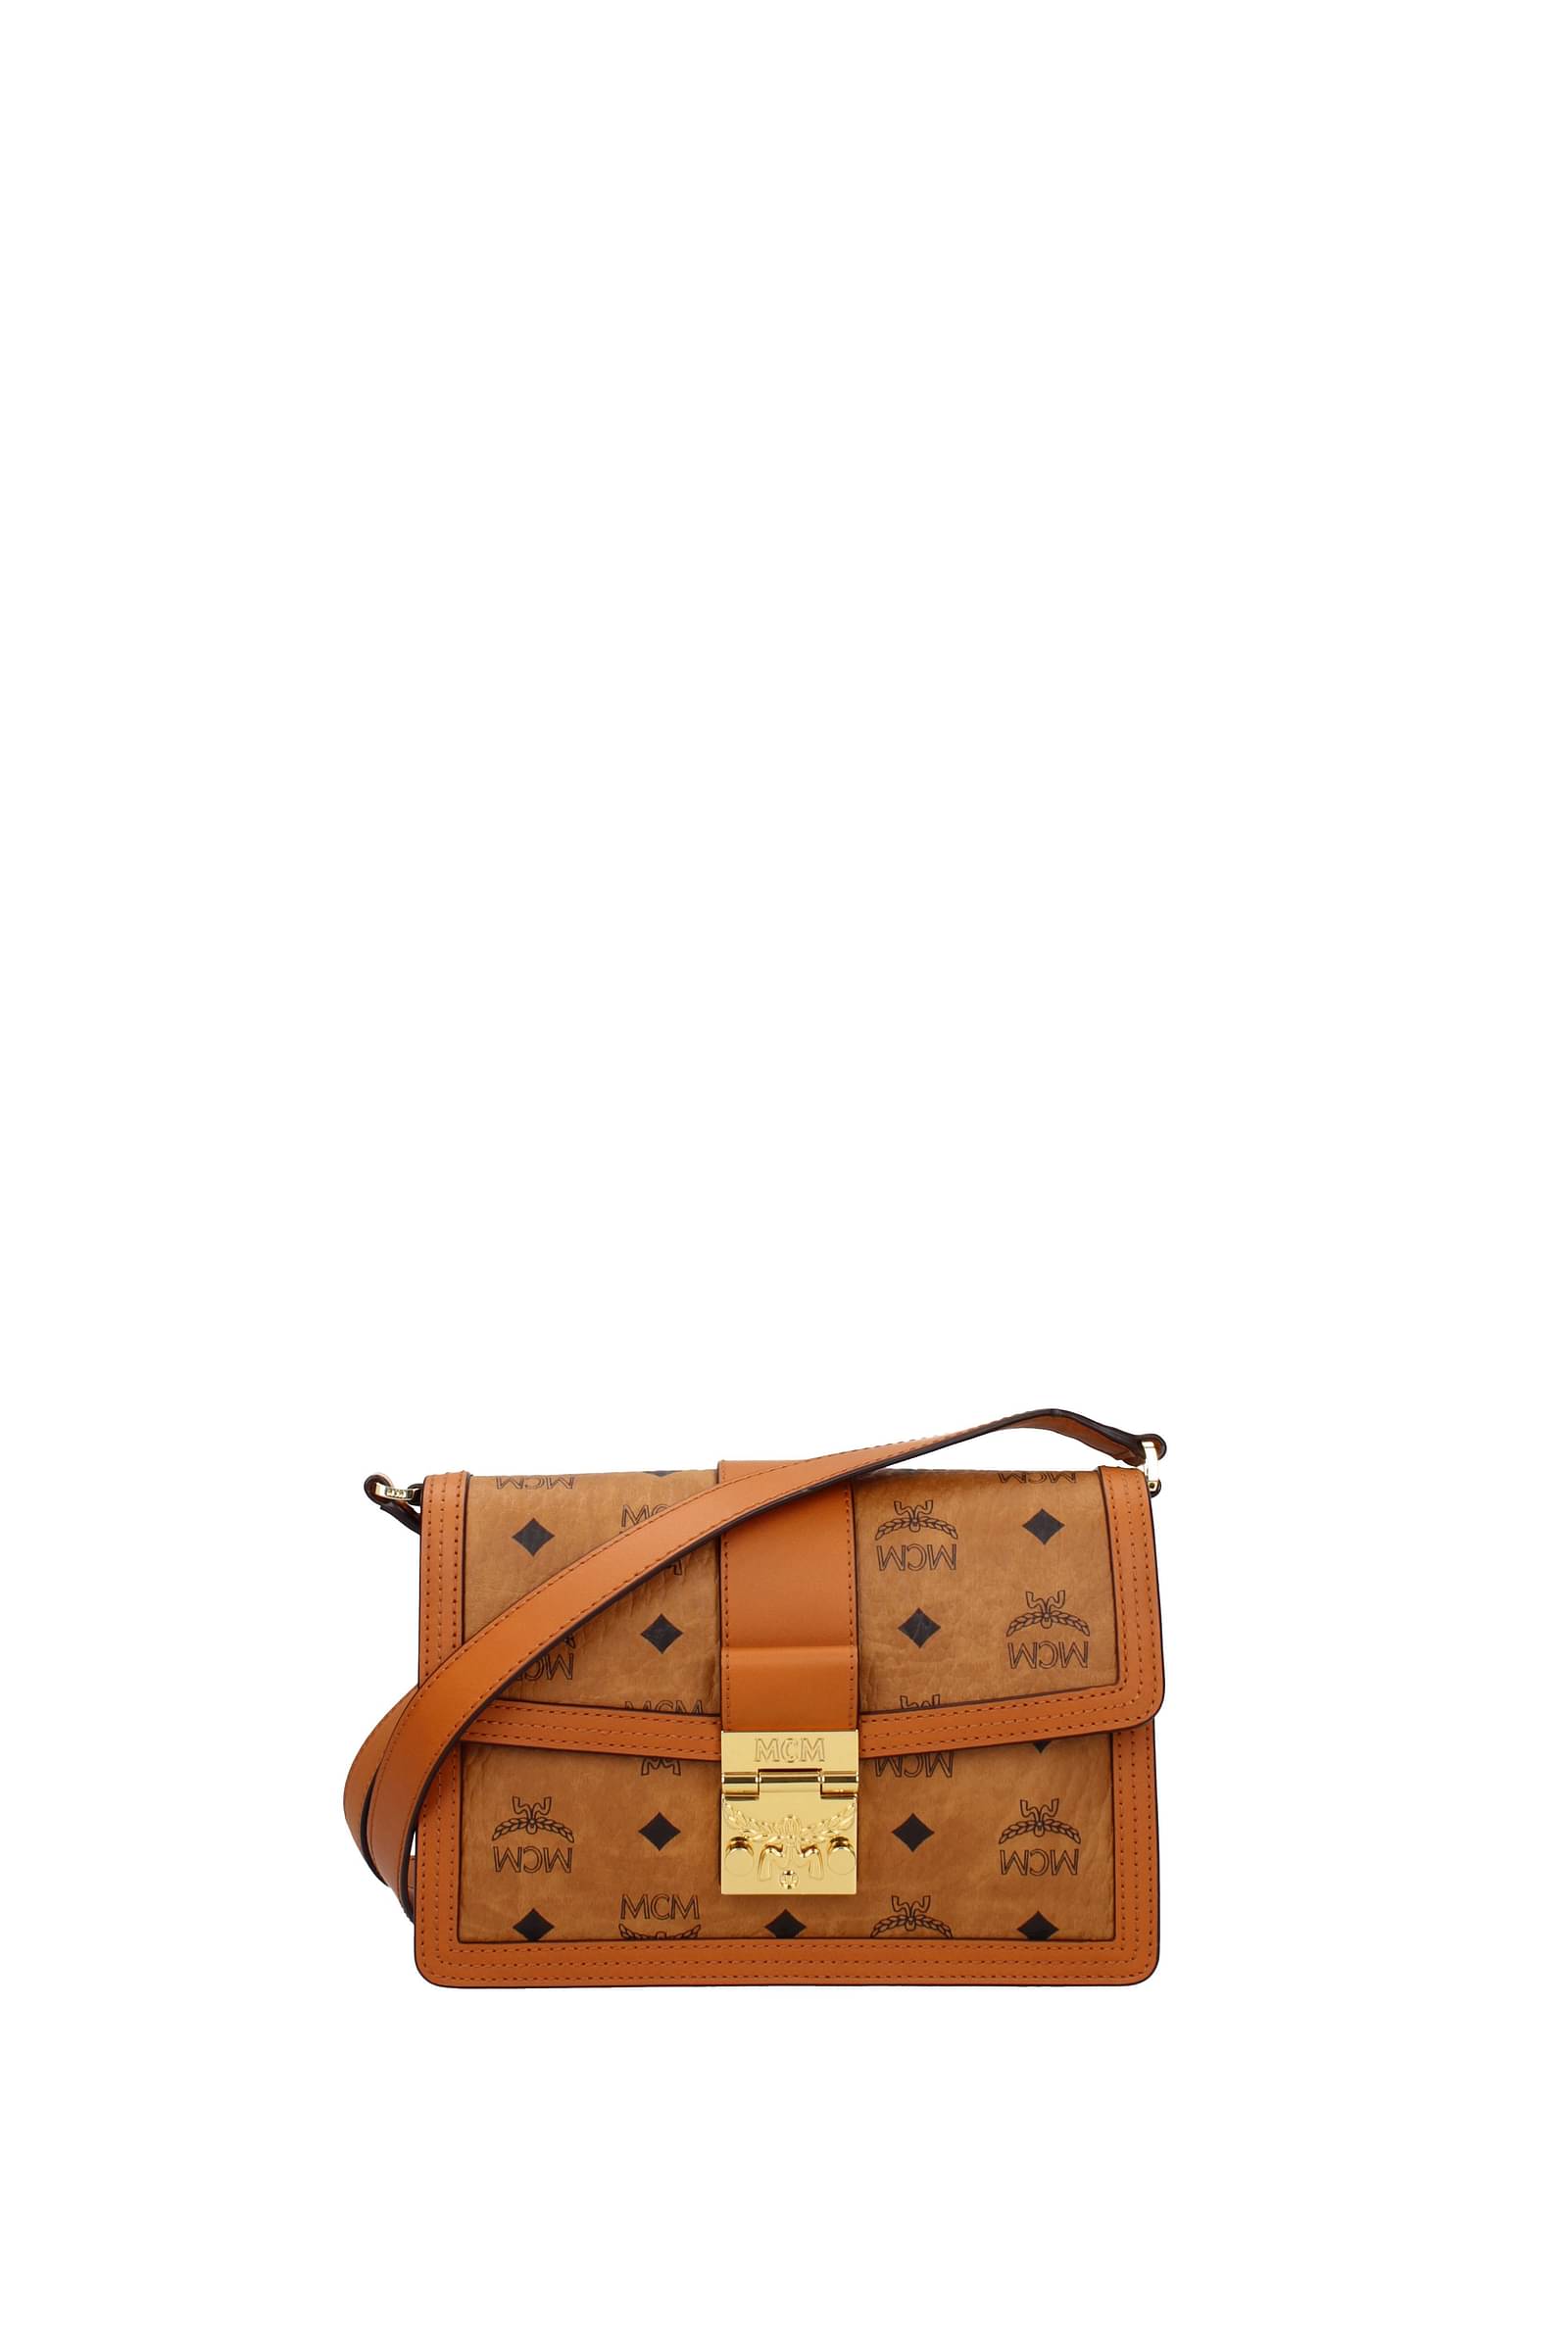 MCM Worldwide Handbag Fashion Backpack Clothing women bag zipper brown  leather png  PNGWing